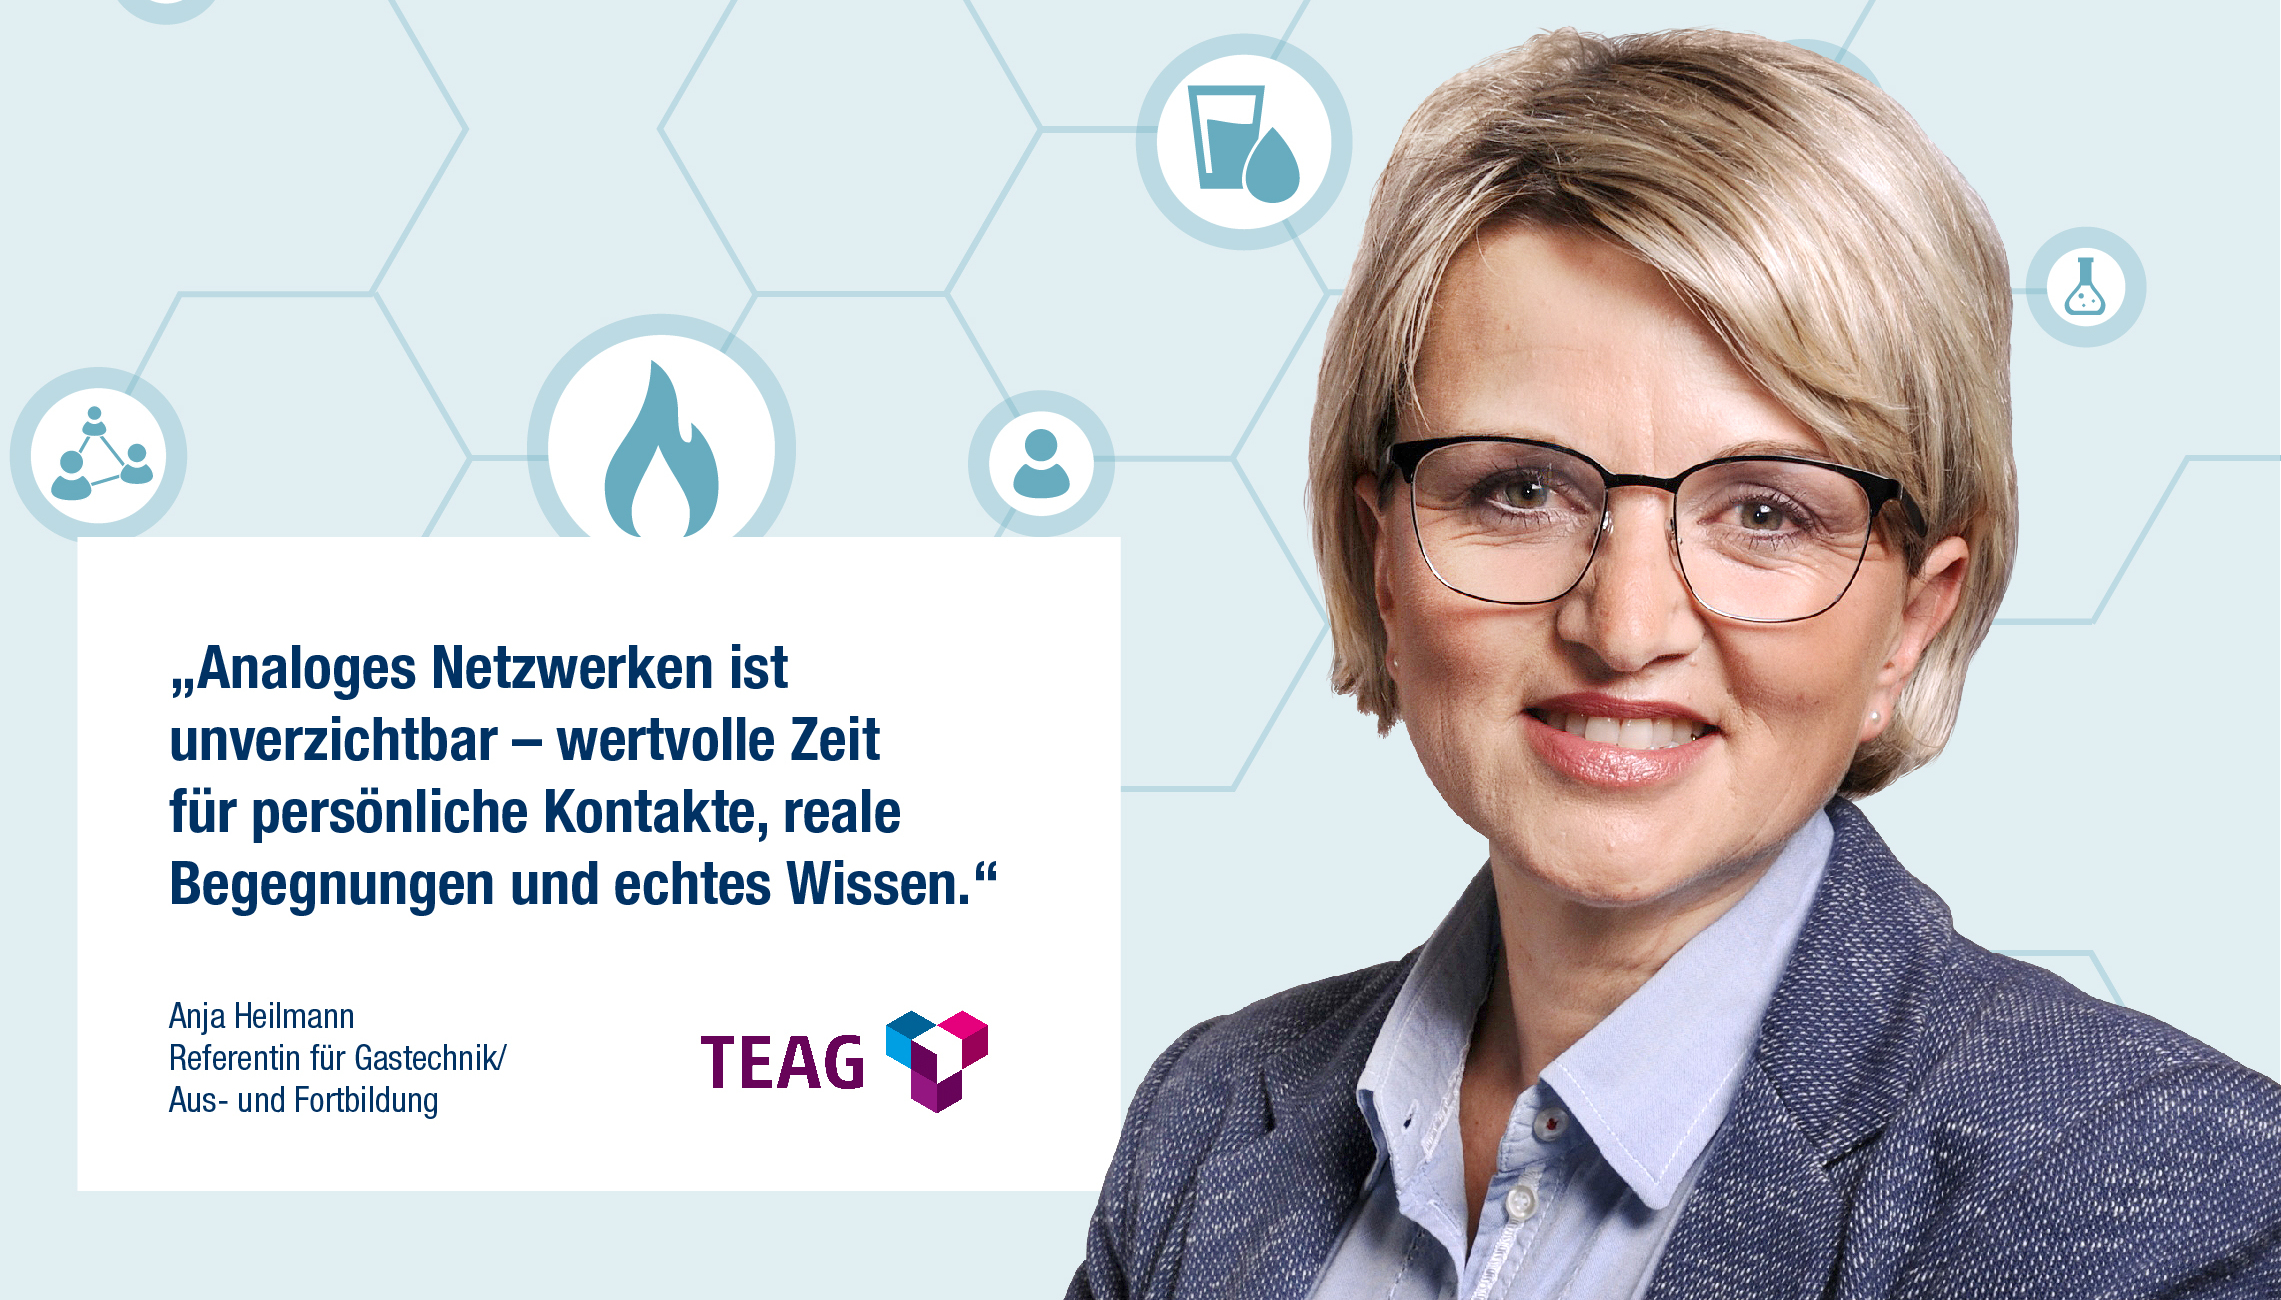 Anja Heilmann, TEAG Thüringer Energie AG